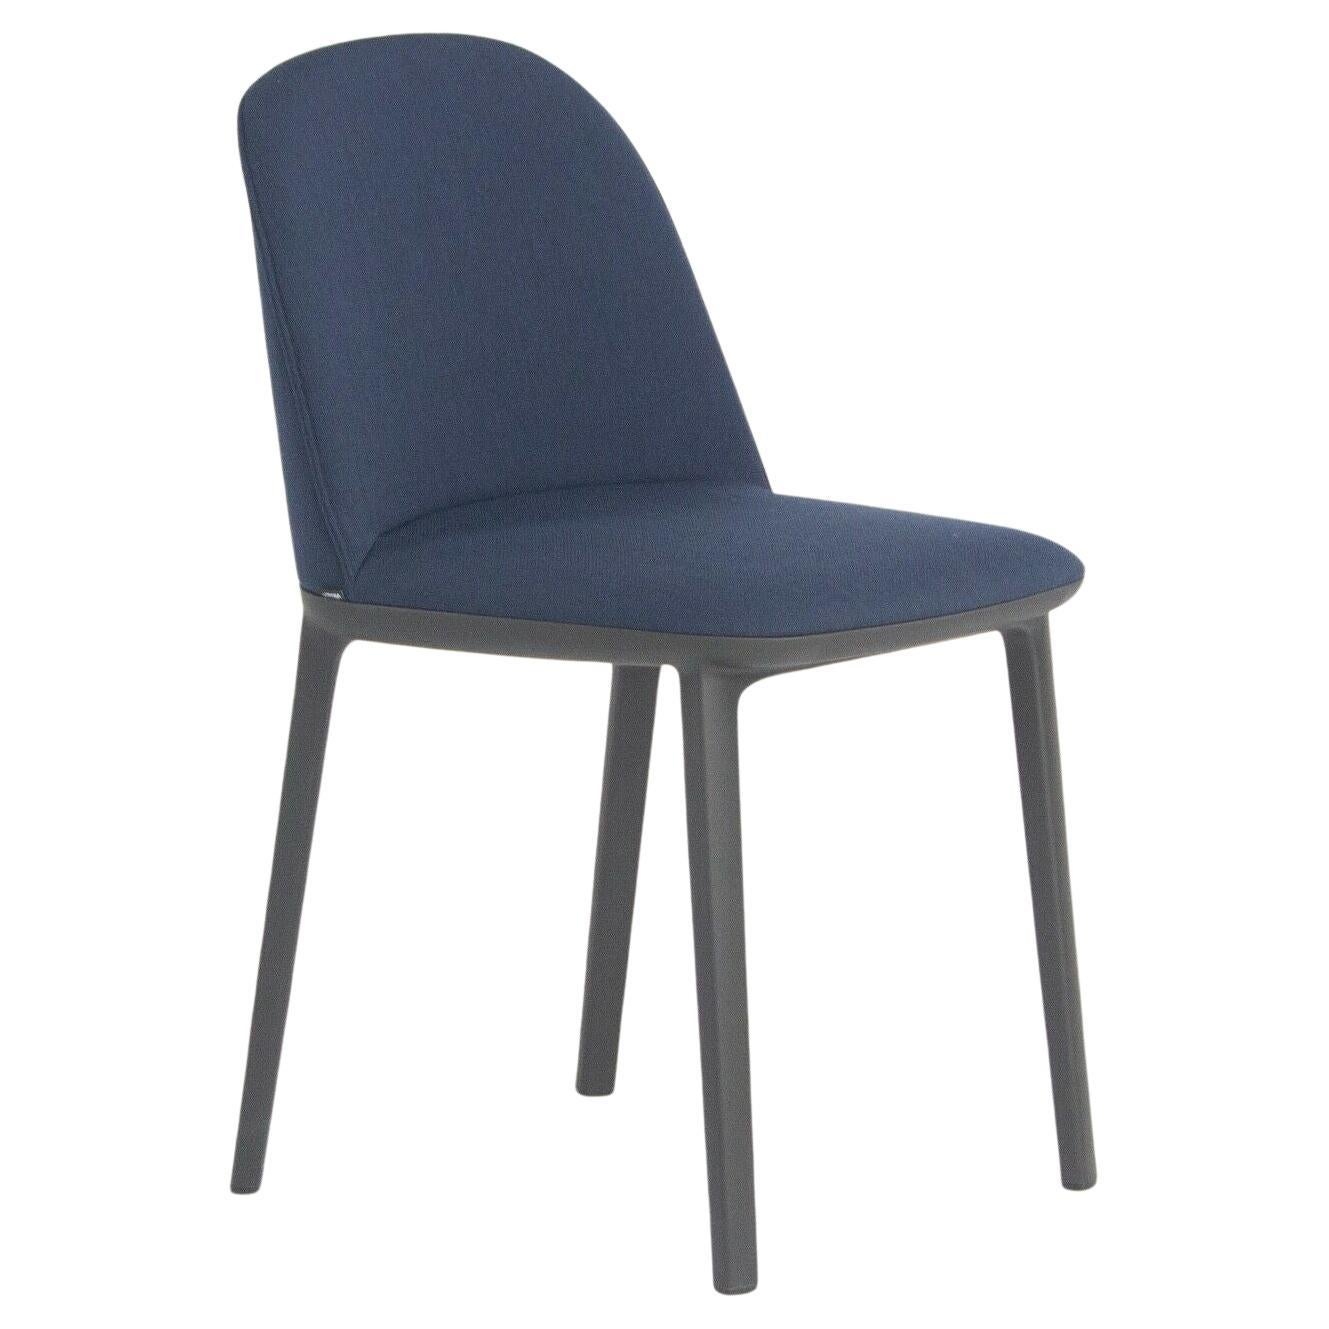 2018 Vitra Softshell Side Chair w/ Dark Blue Fabric by Ronan & Erwan Bouroullec For Sale